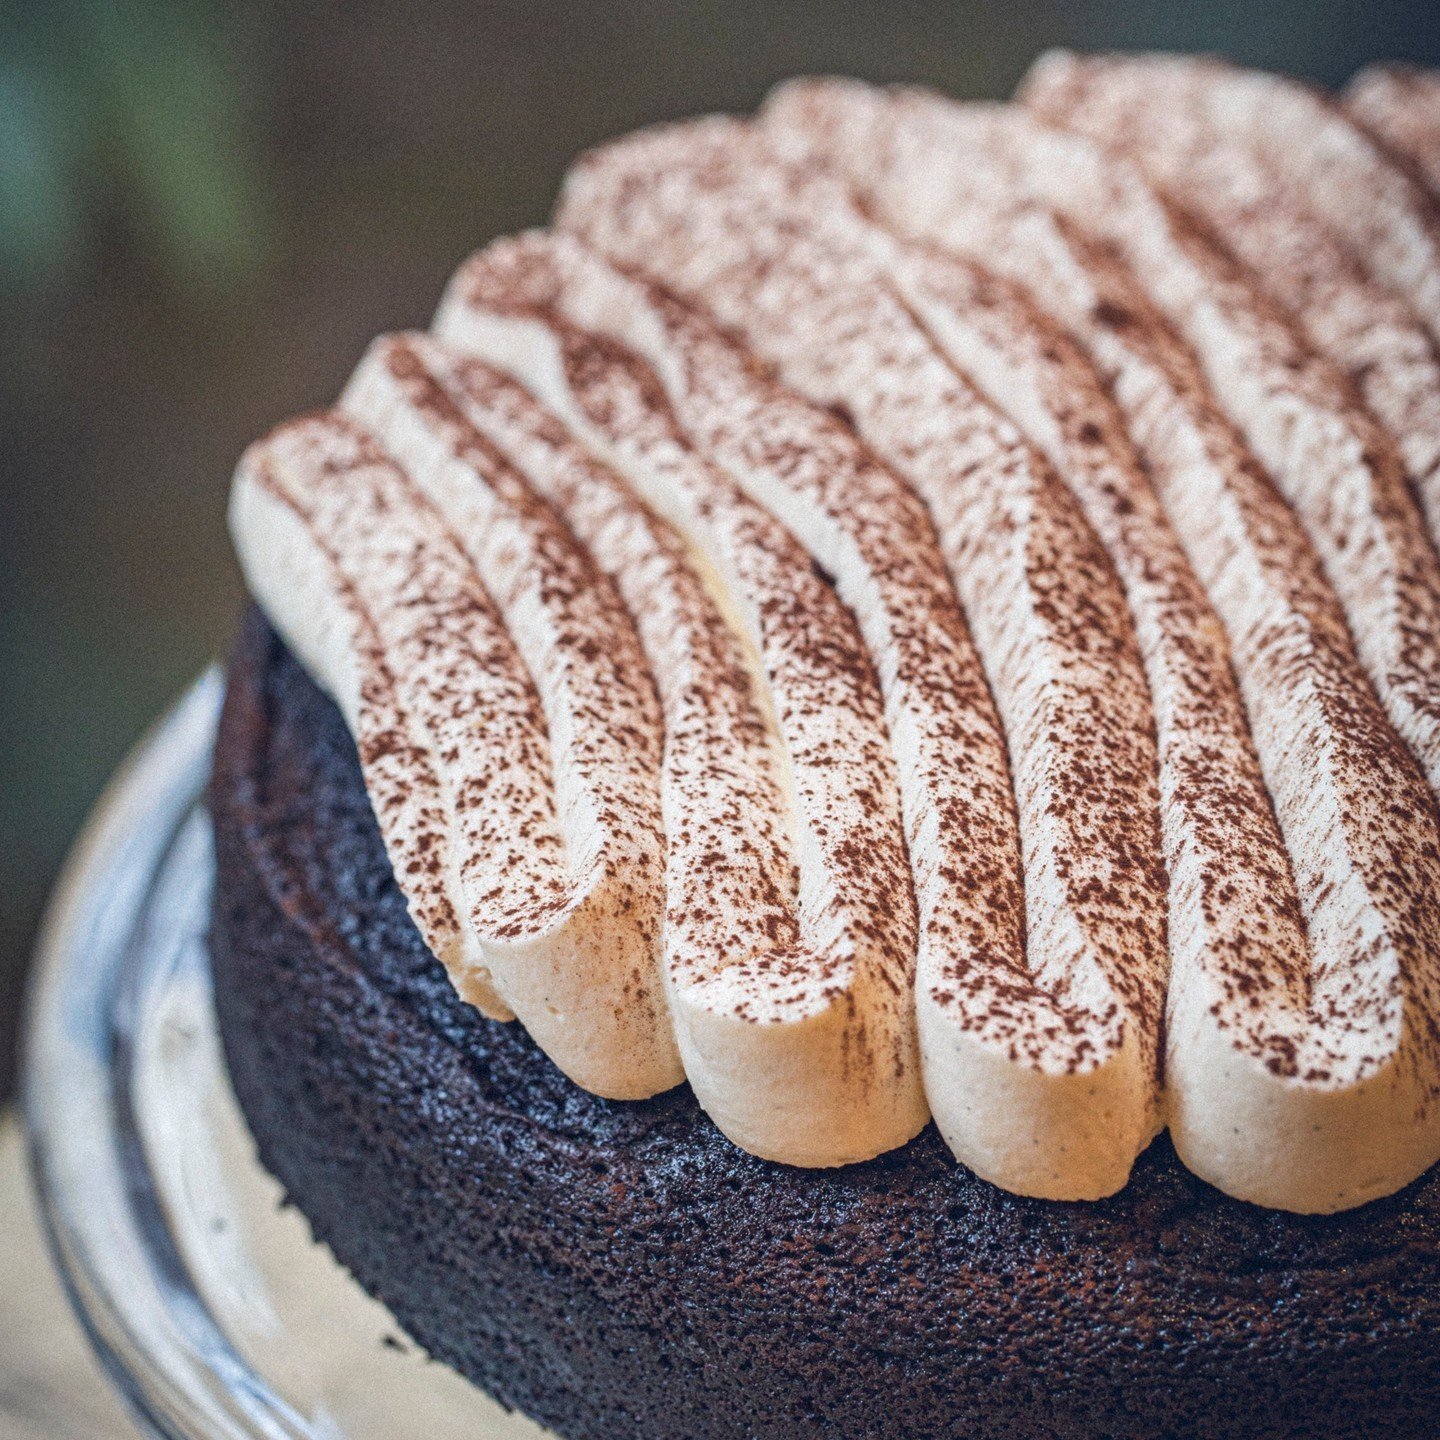 Chocolate Guinness cake

#cake #cakelover #chocolate #chocolatecake #guinnesscake